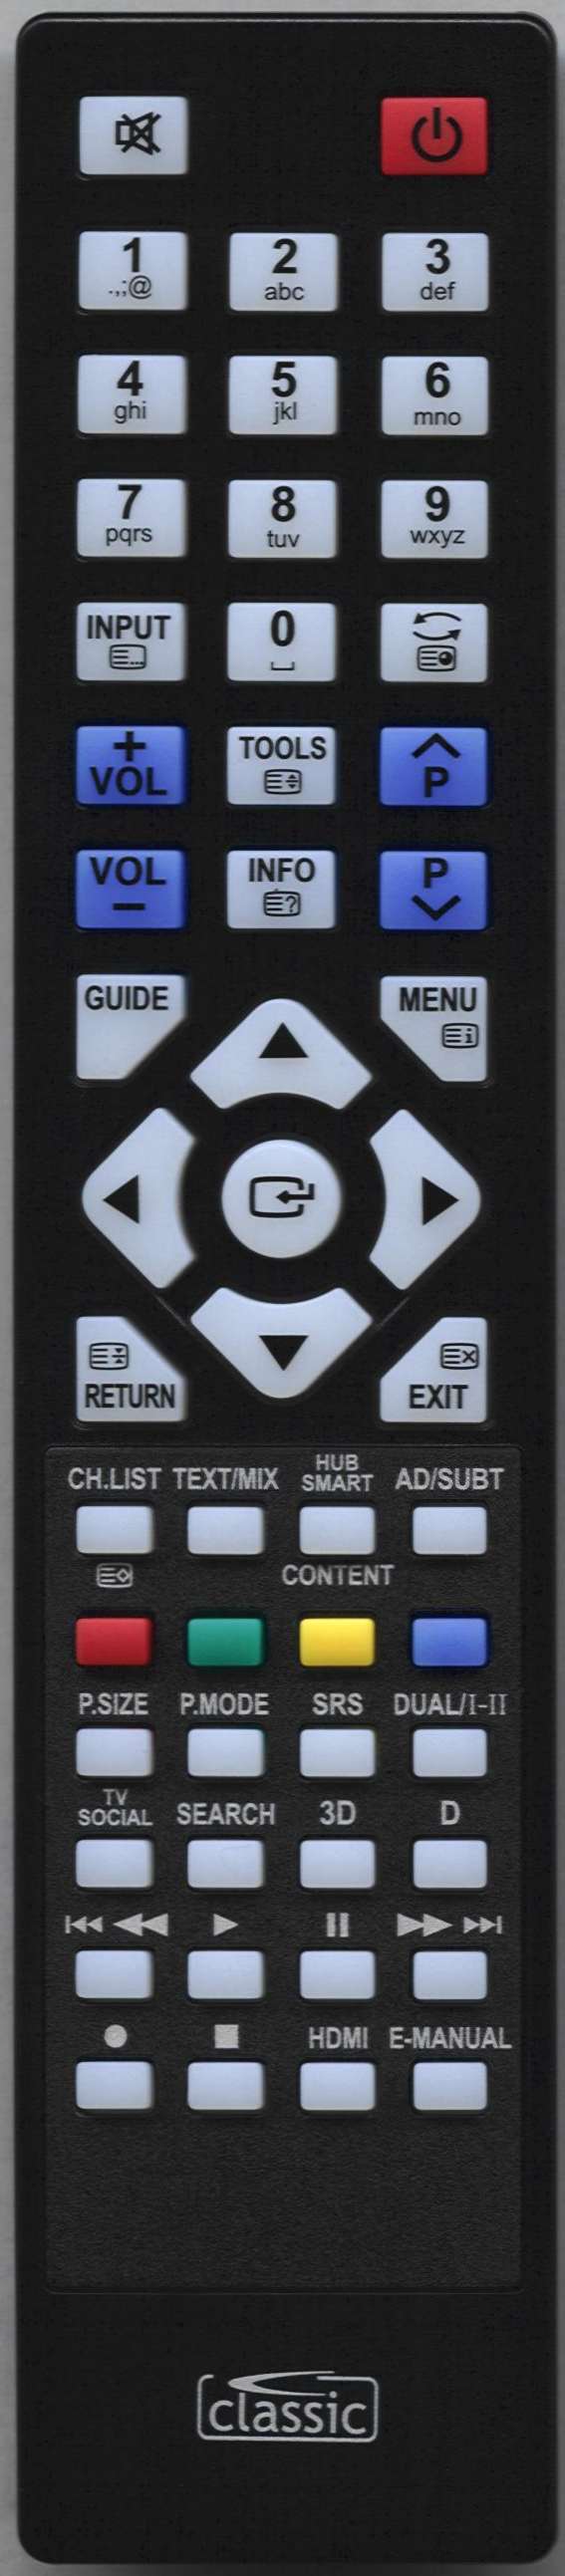 Samsung AA59-00789A Remote Control